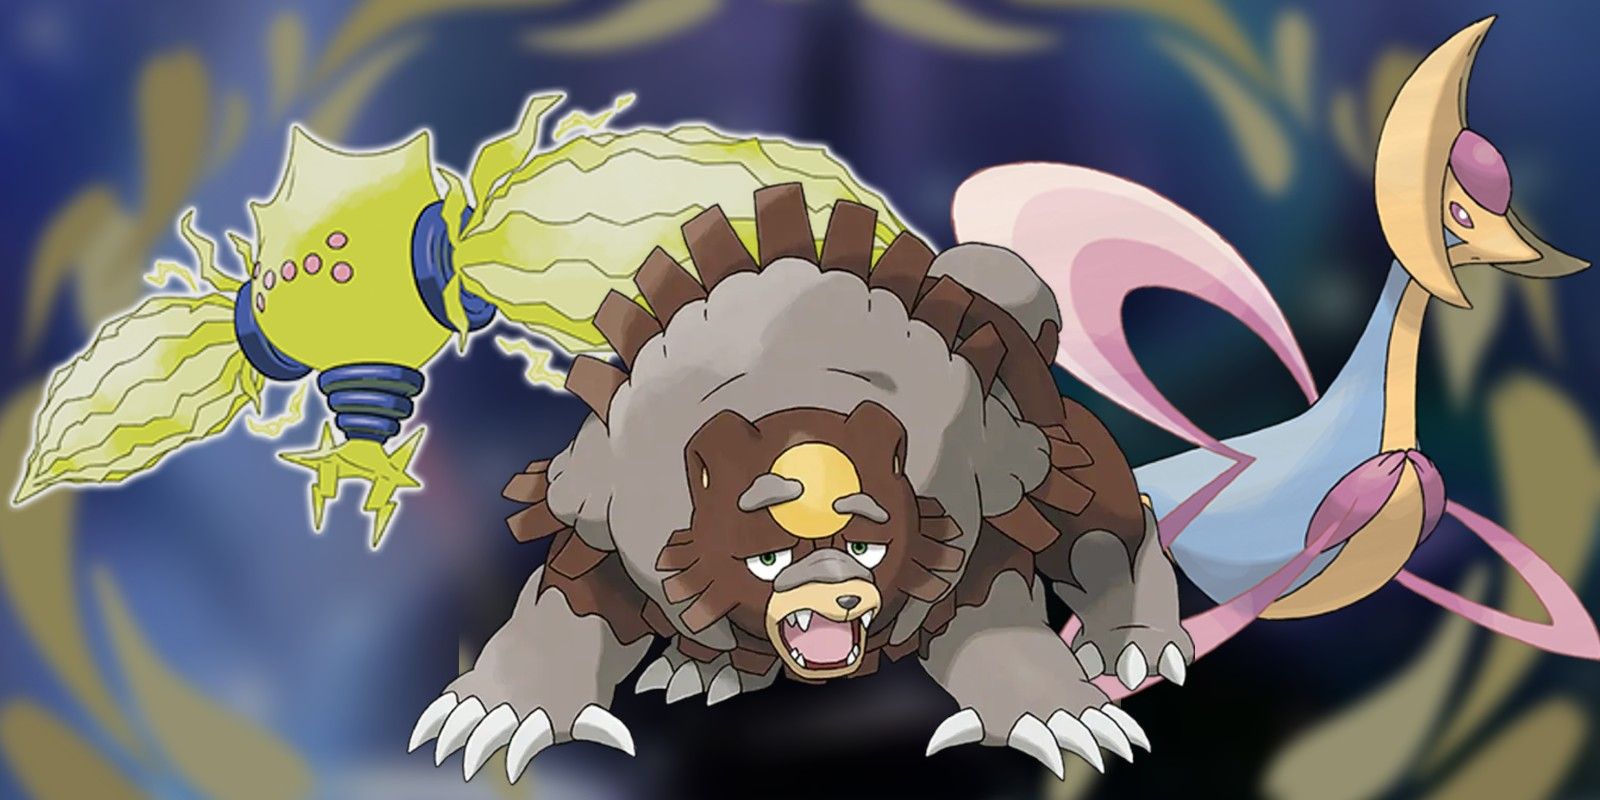 Miraidon (Pokémon GO): Stats, Moves, Counters, Evolution